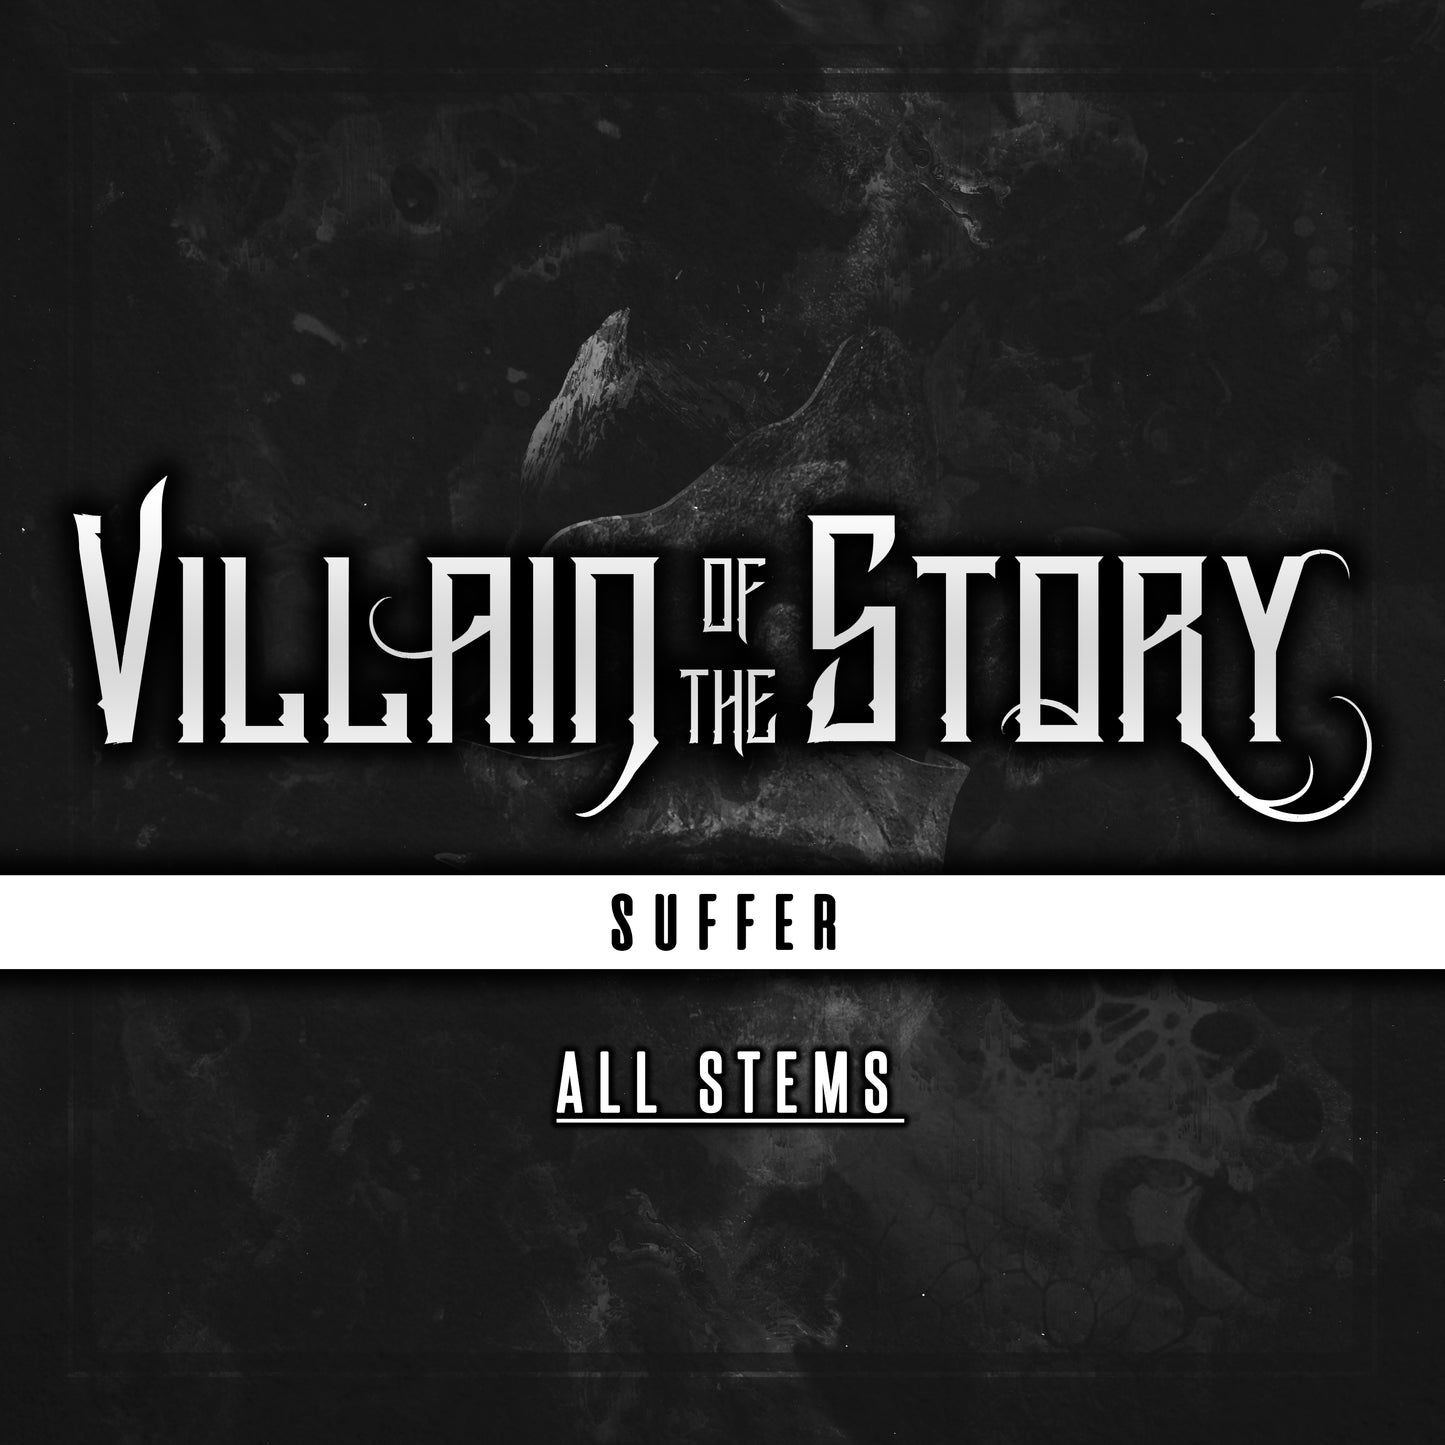 Suffer - All Studio Stems